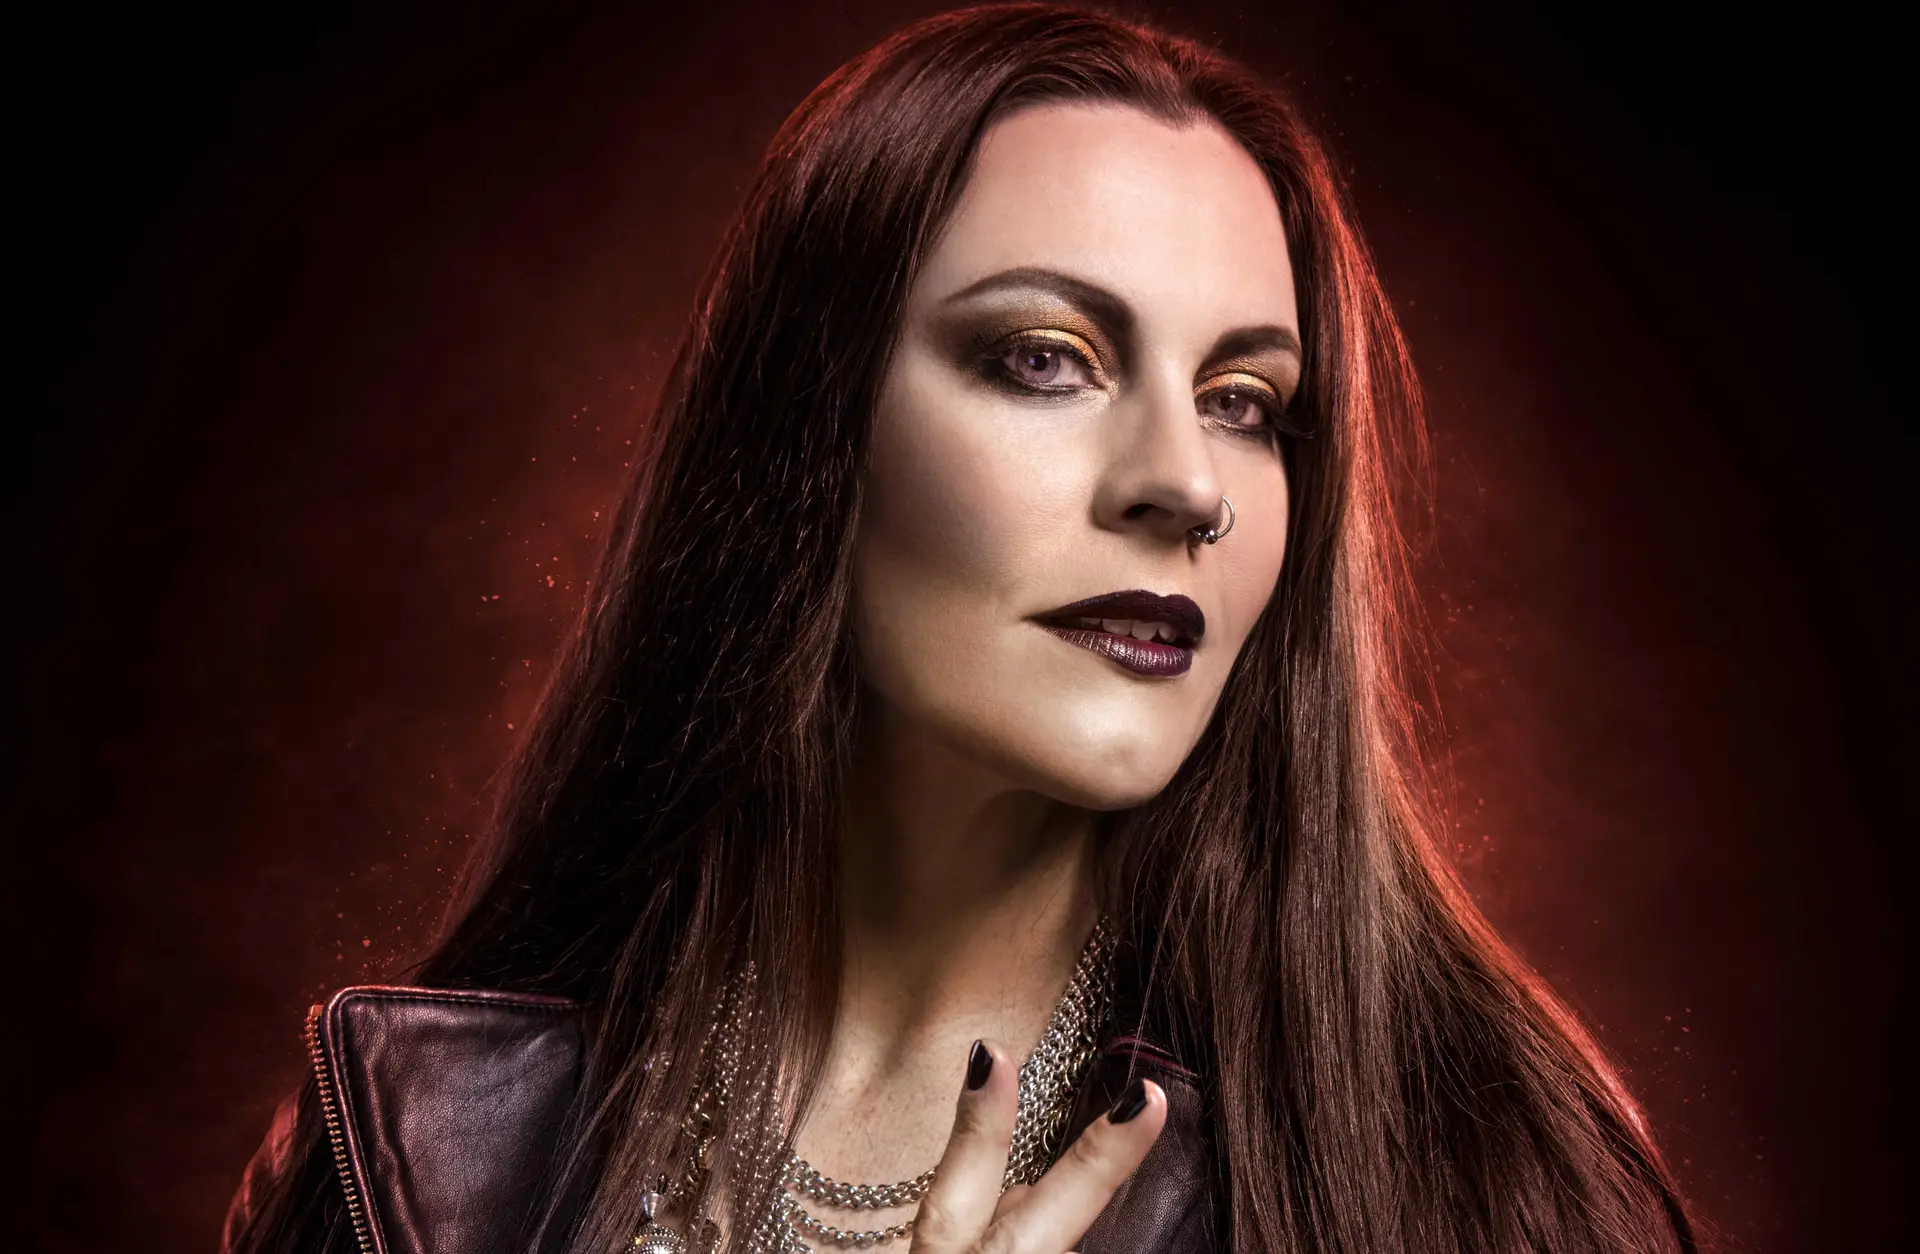 Floor Jansen, vocalista dos Nightwish, está a lutar contra um cancro